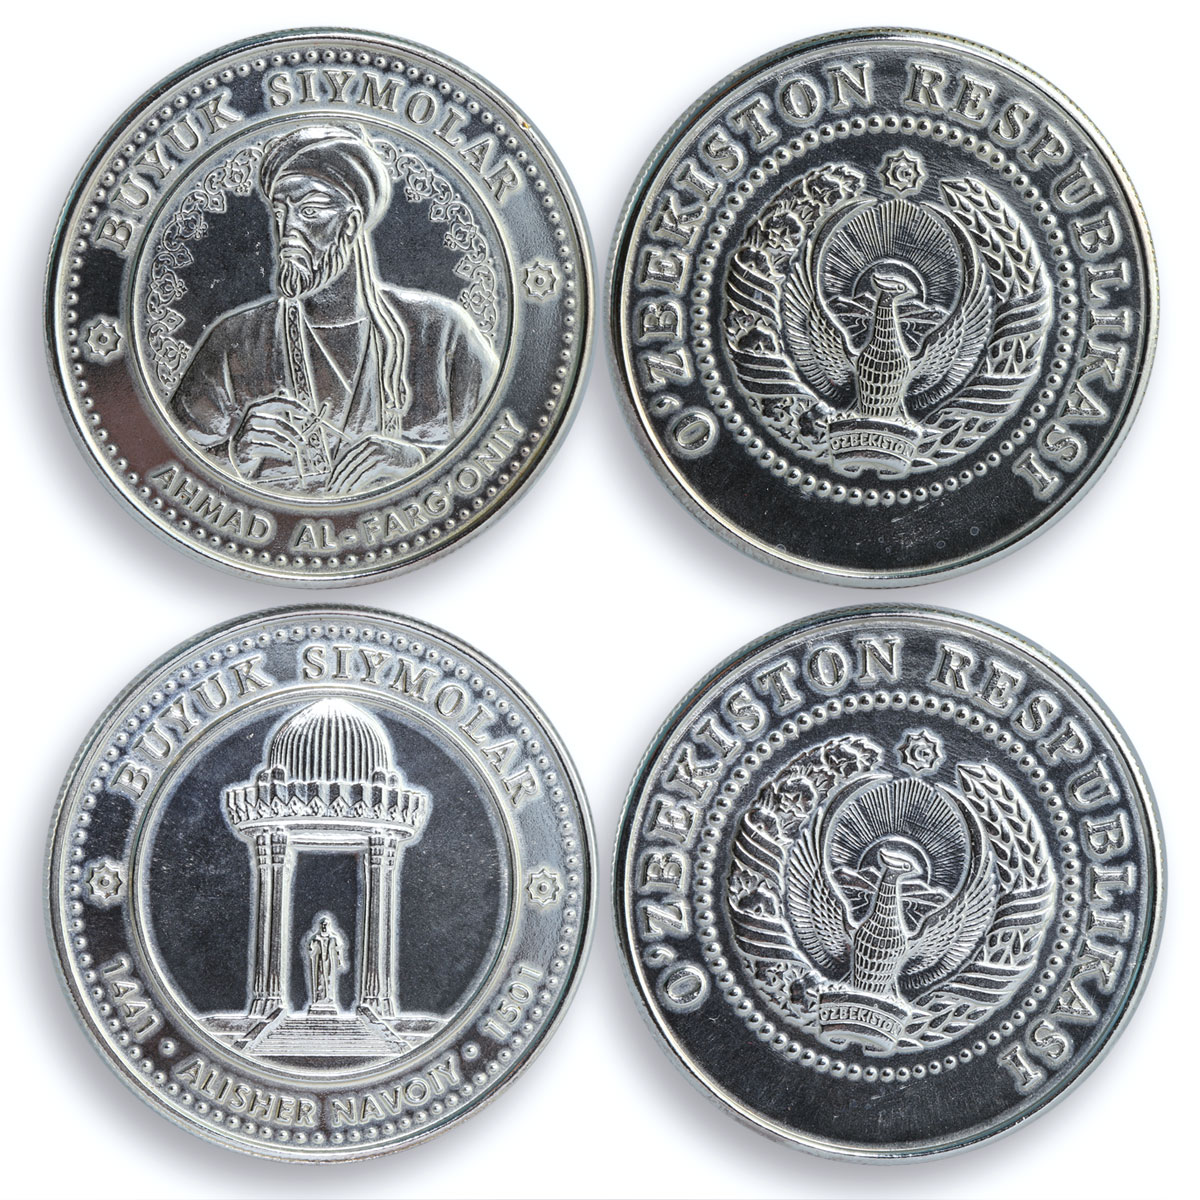 Uzbekistan set of 8 tokens Great Ancestors silver coins (medals) 1999